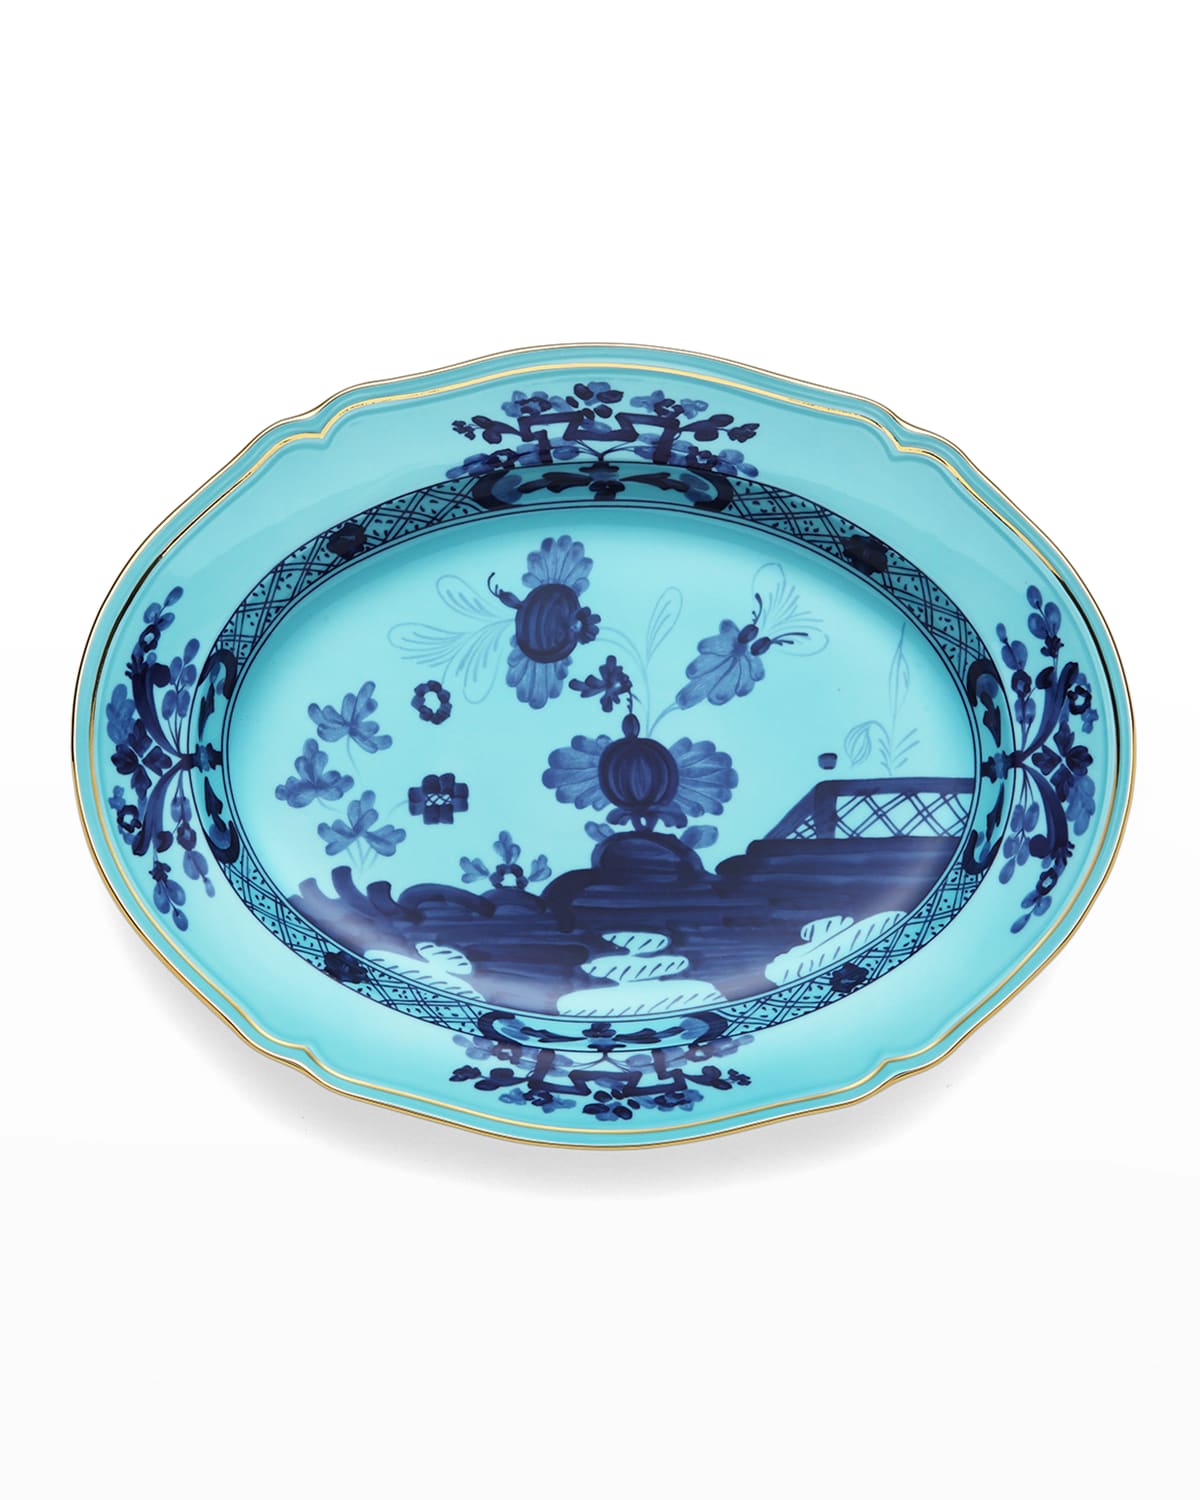 Oriente Italiano Oval Platter, Iris